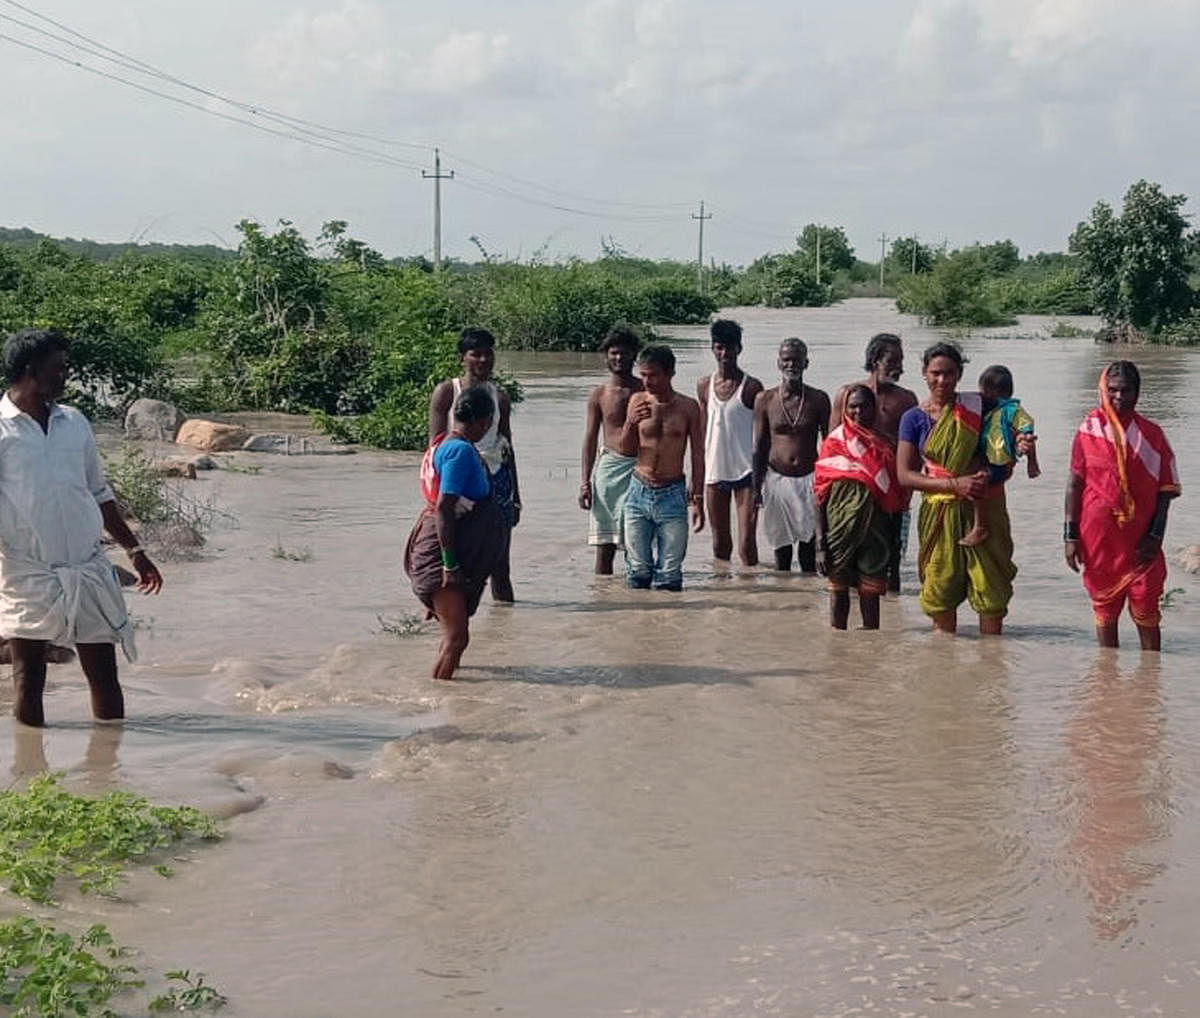 Villagers walk in flood to save those stranded at Tavadagaddi in Lingsugur taluk in Raichur district. Credit: DH Photo